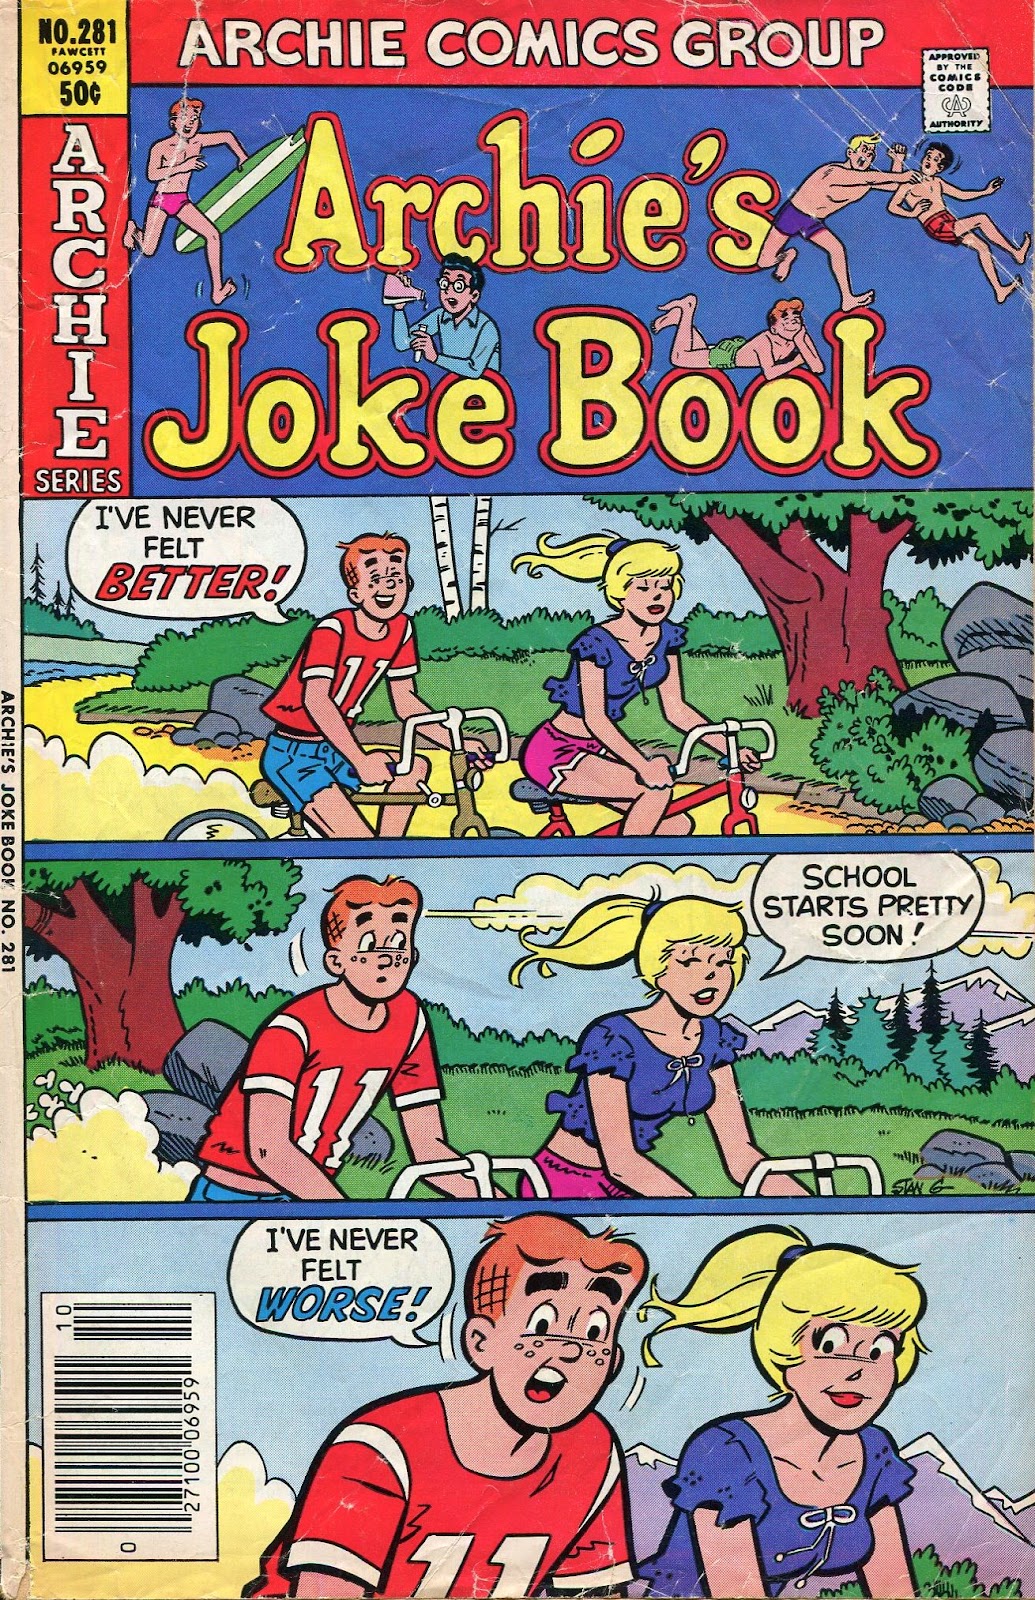 Archie's Joke Book Magazine issue 281 - Page 1